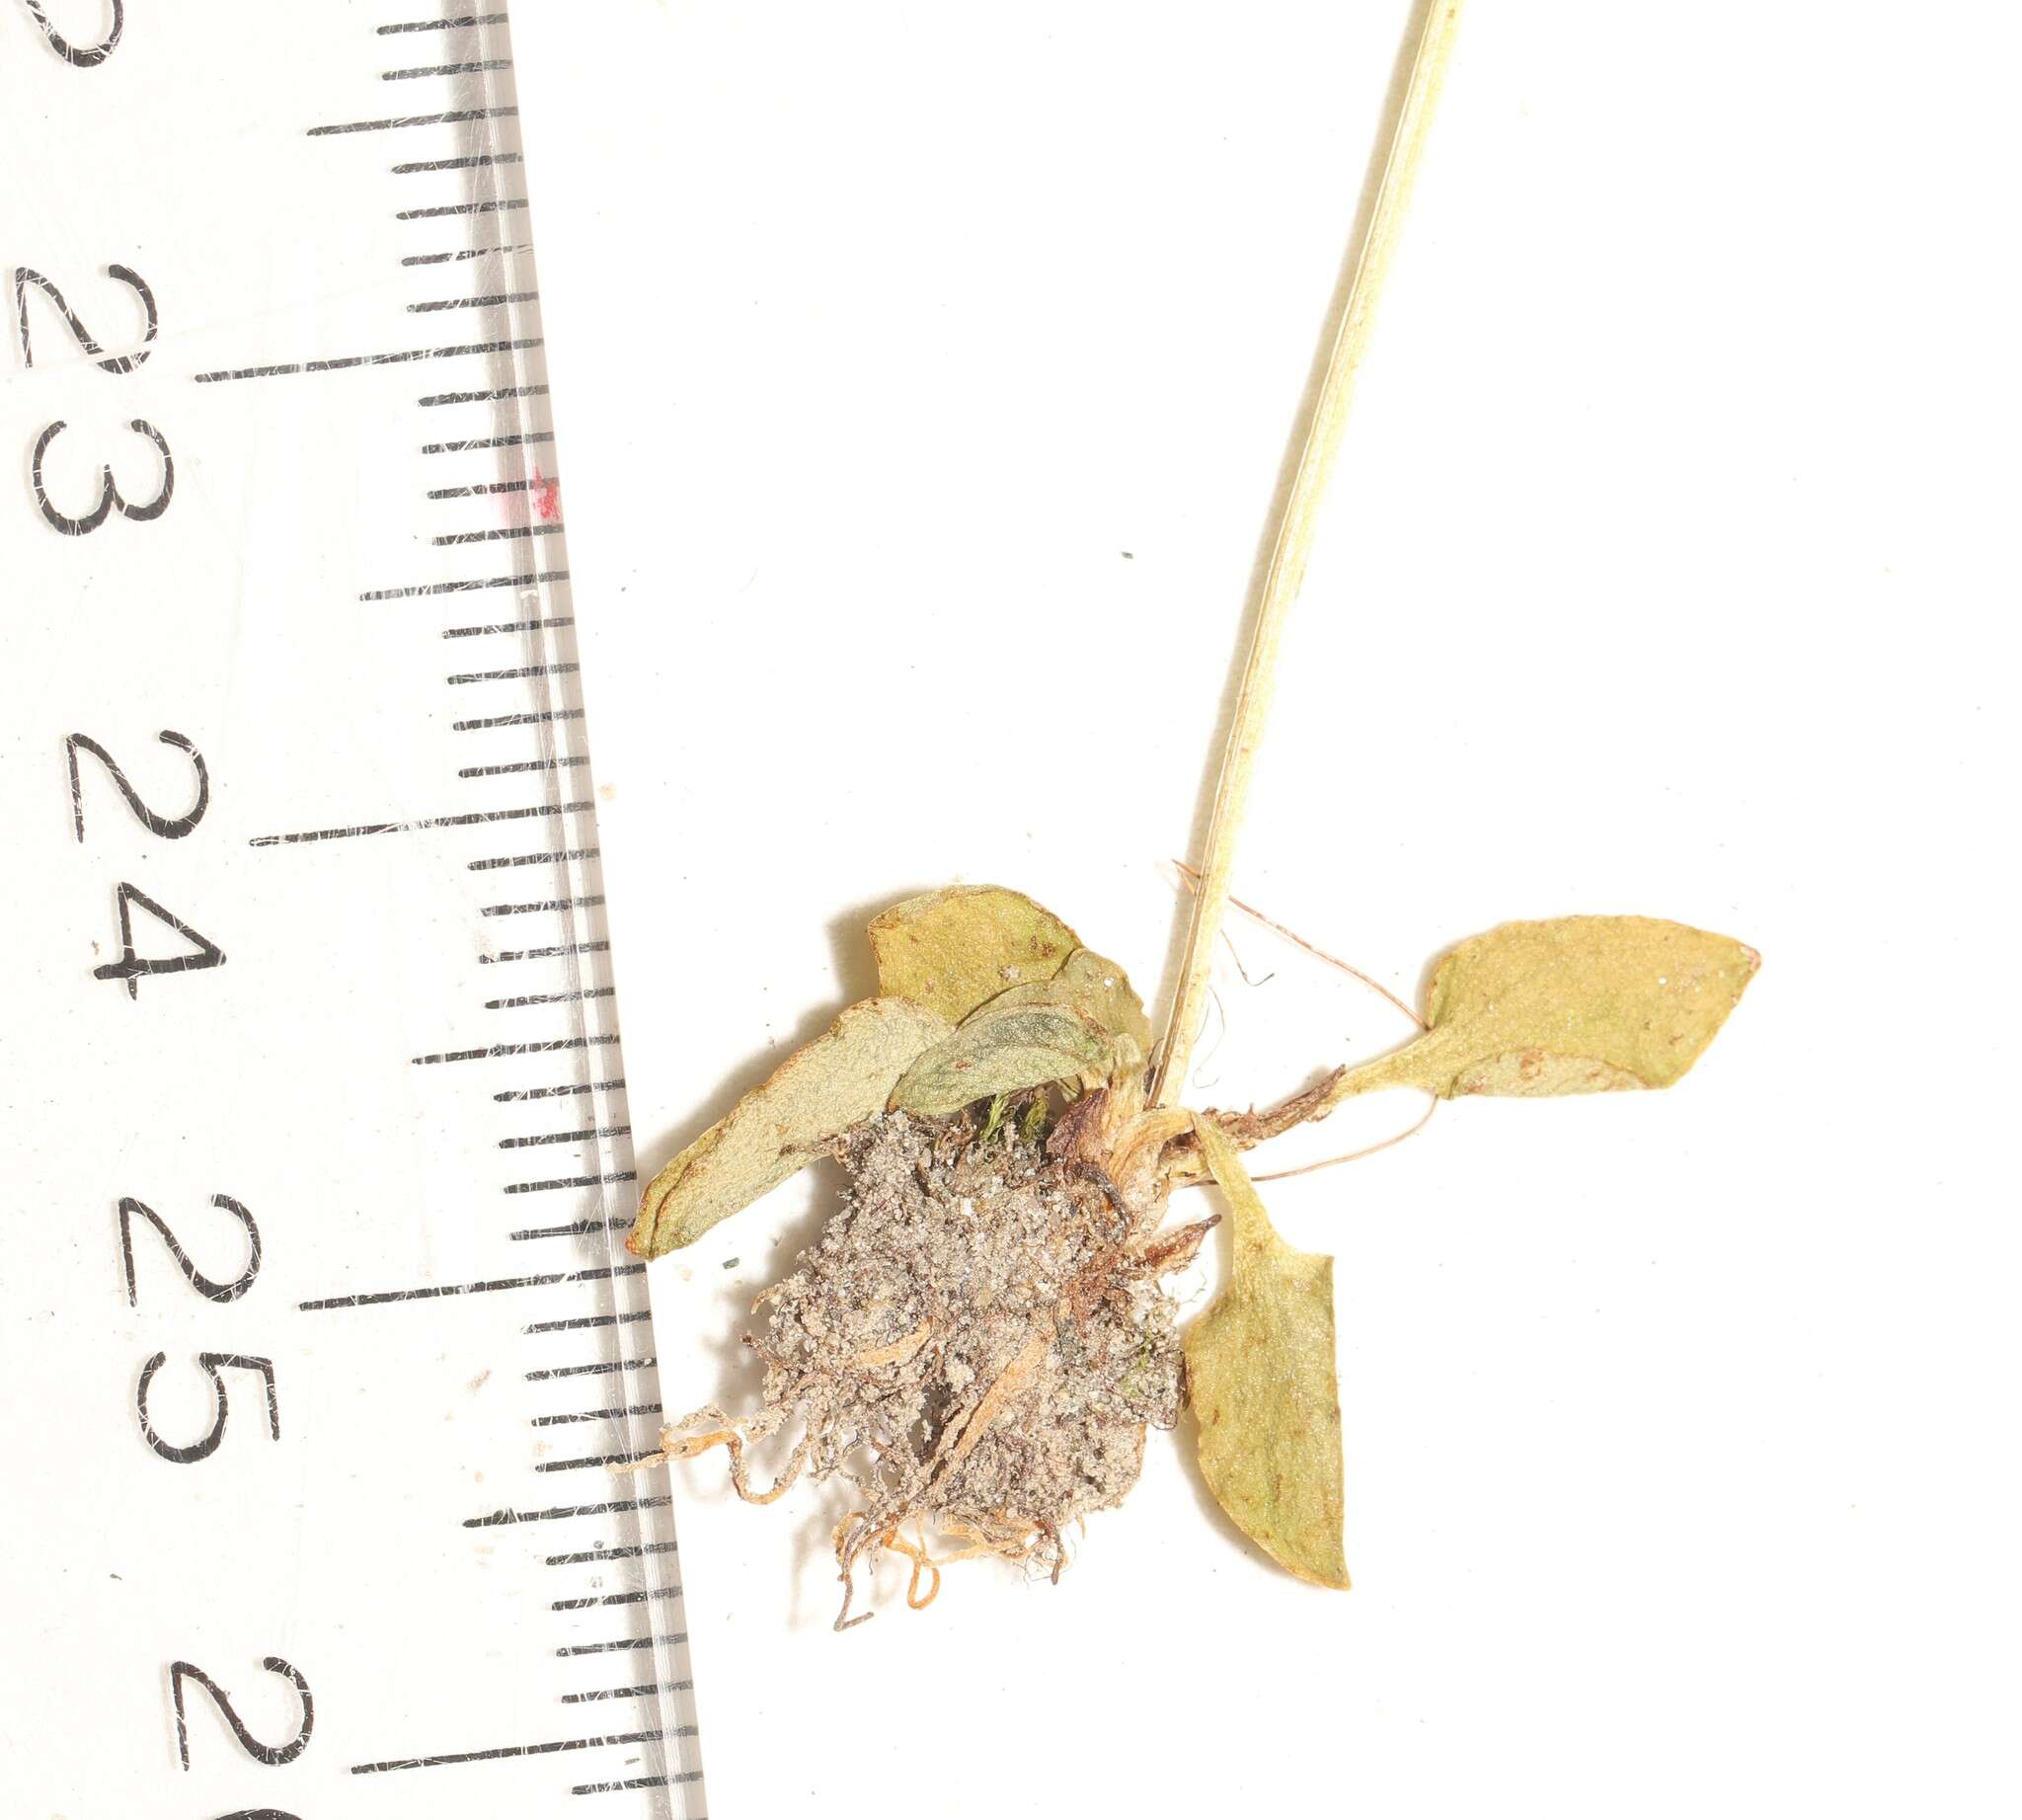 Image of Small-Flower Grass-of-Parnassus